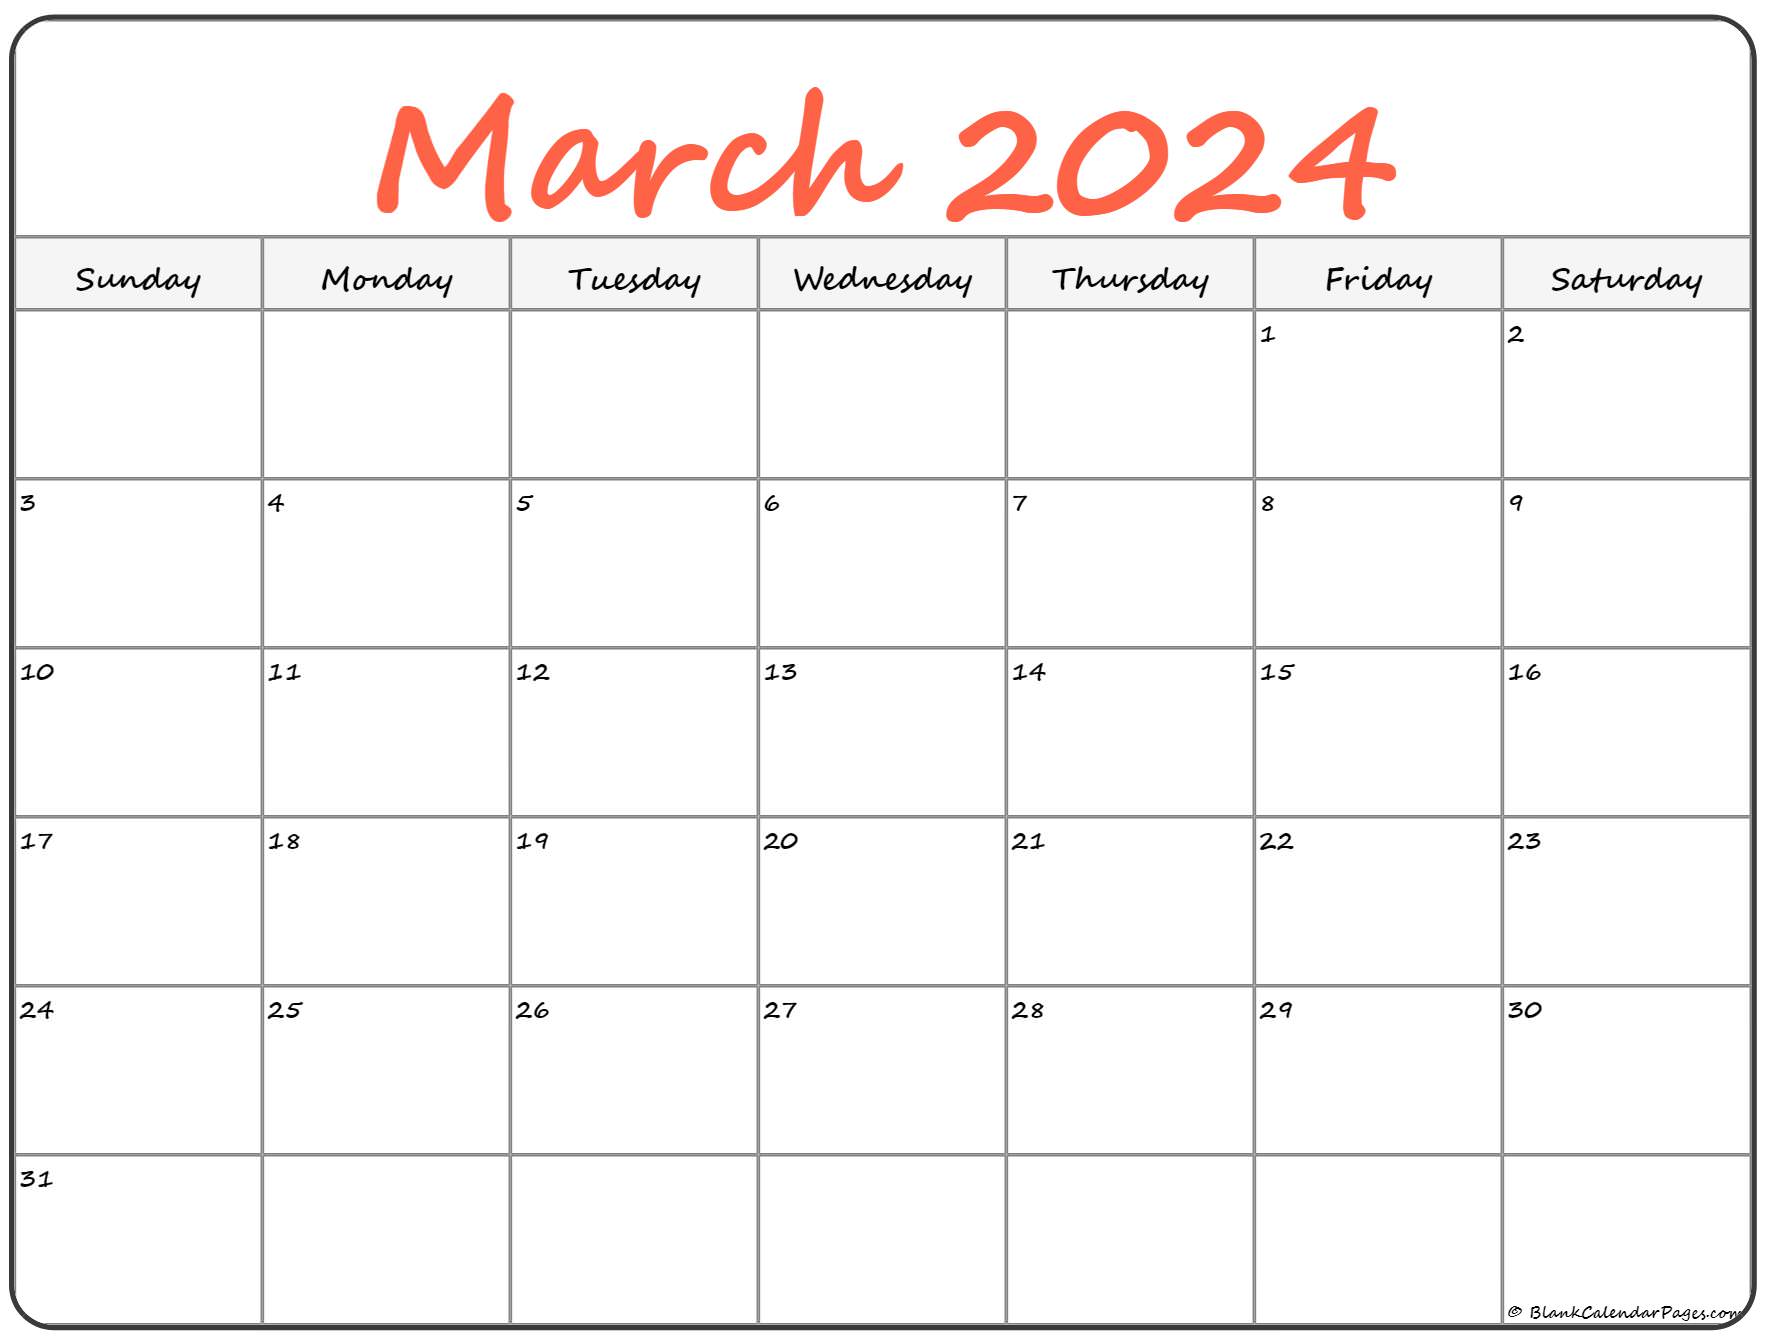 March 2023 Calendar Free Printable Calendar March 2023 Calendar Free 